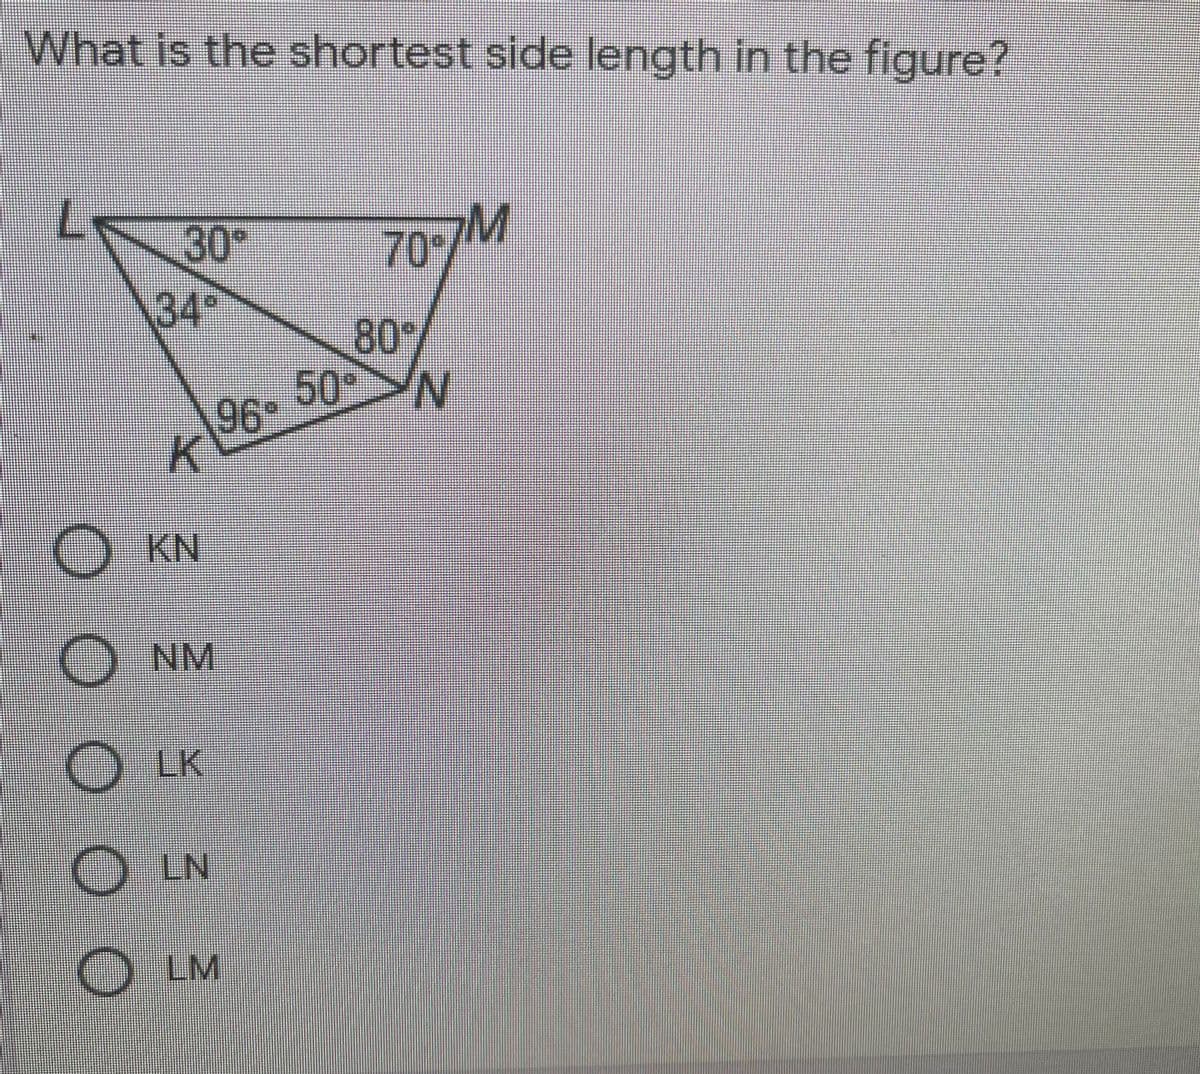 96 50 N
What is the shortest side length in the figure?
30*
M
70/
34°
80
50°>N
96
KN
O NM
LK
) LN
OLM
O O O O O
